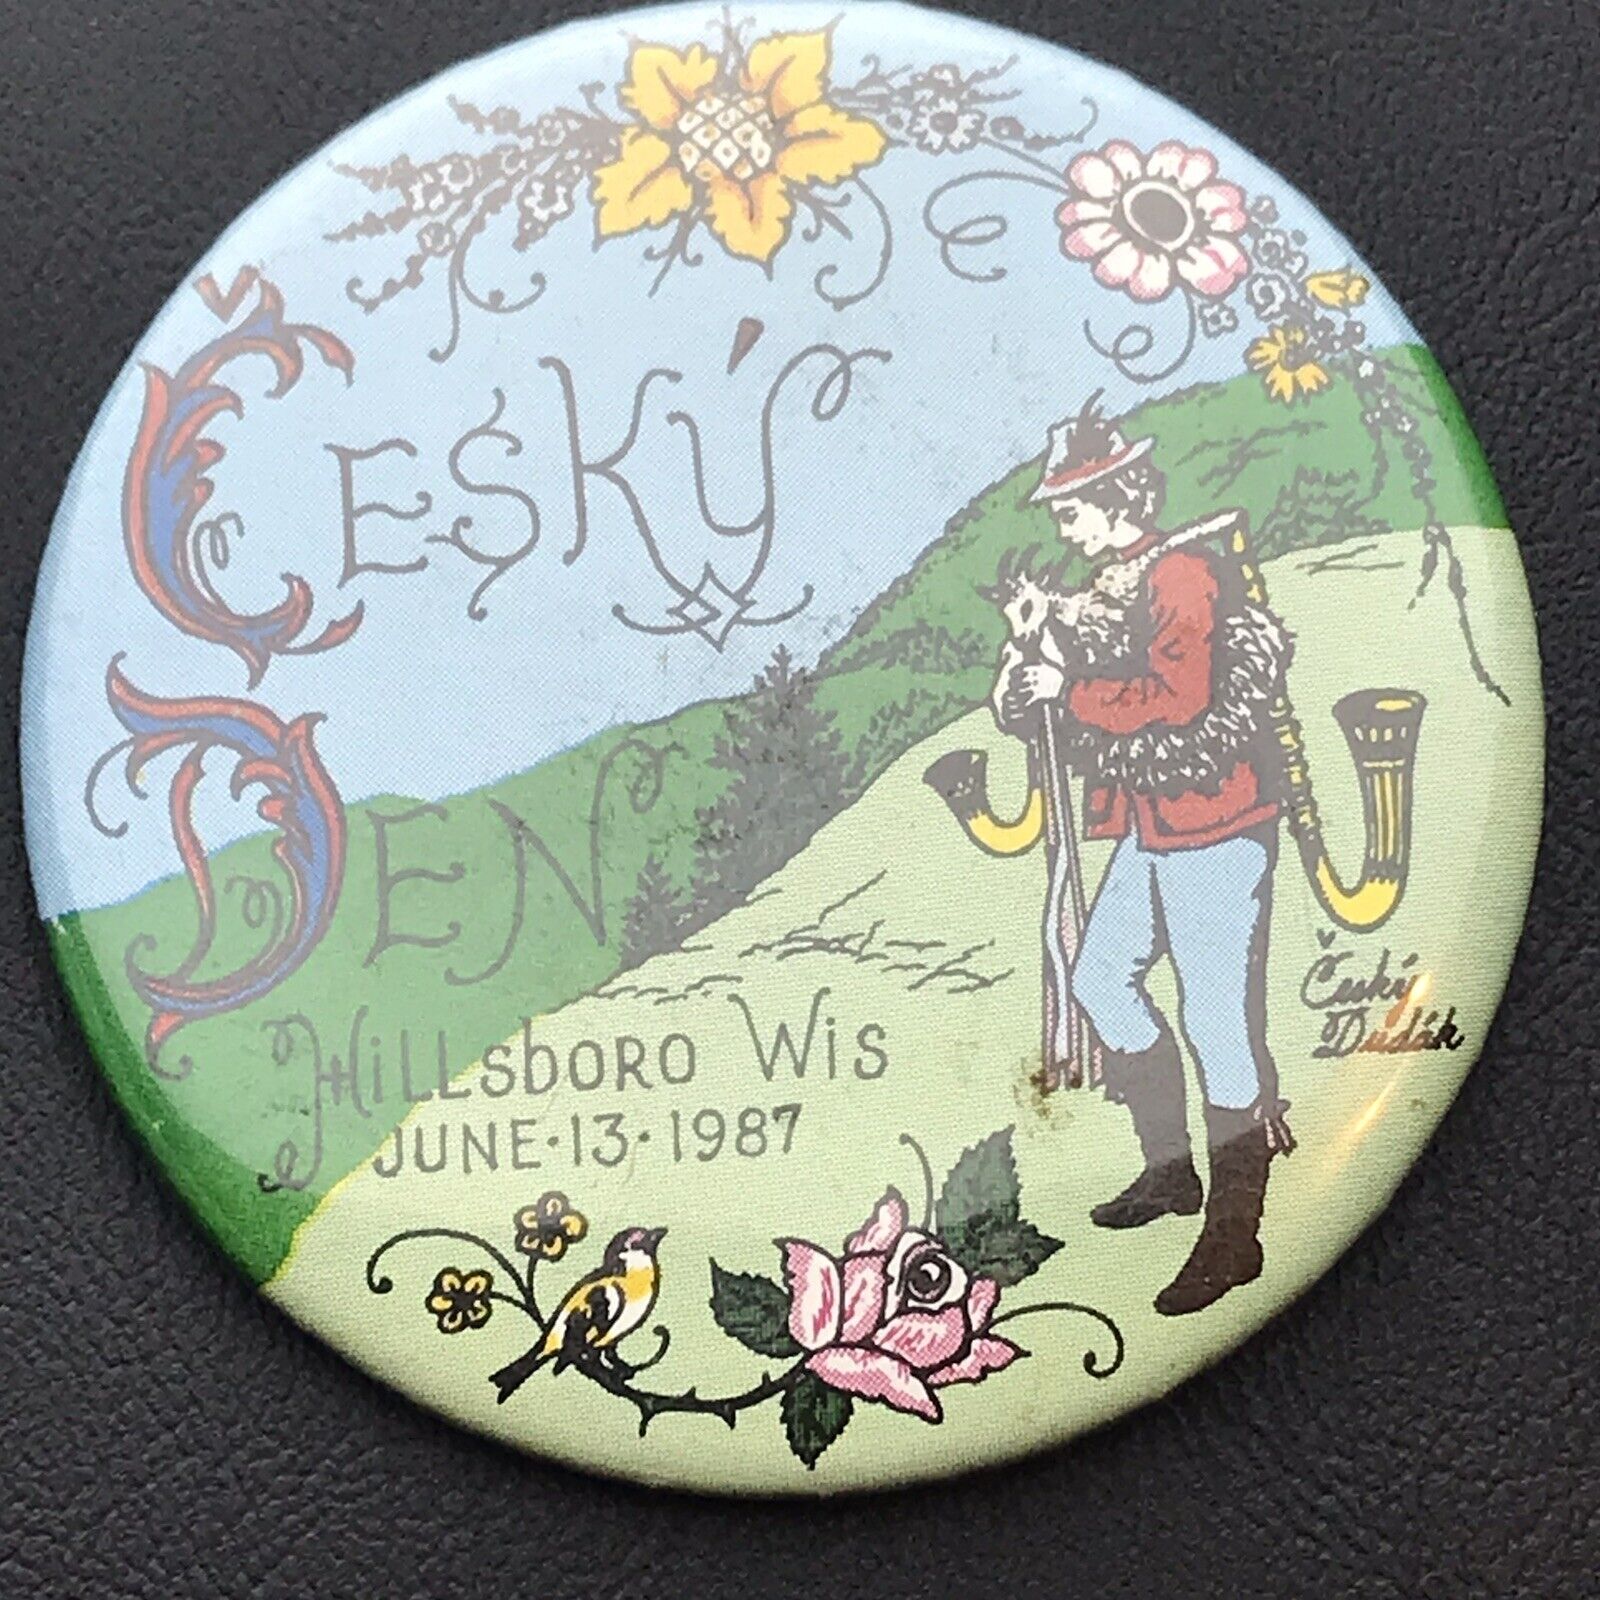 Cesky Den Vintage Pin Button 1987 Hillsboro Wisconsin Pinback 80s